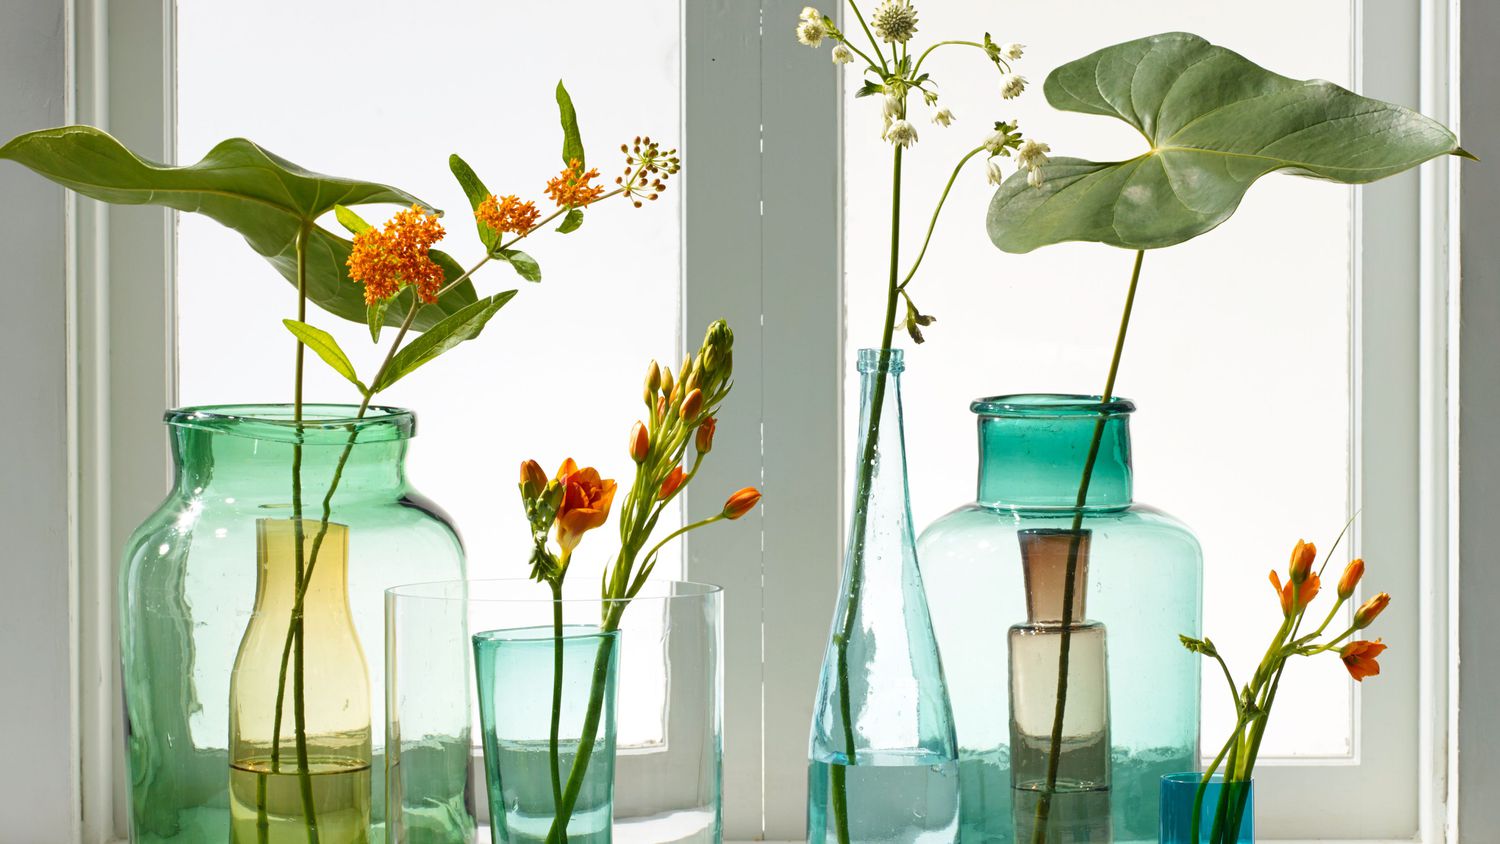 4 ARTIBETTER Flower Vase Dry Flower and Vase Kit Plants Photography Props Home Adornment Desktop Decroation Wedding Ornament